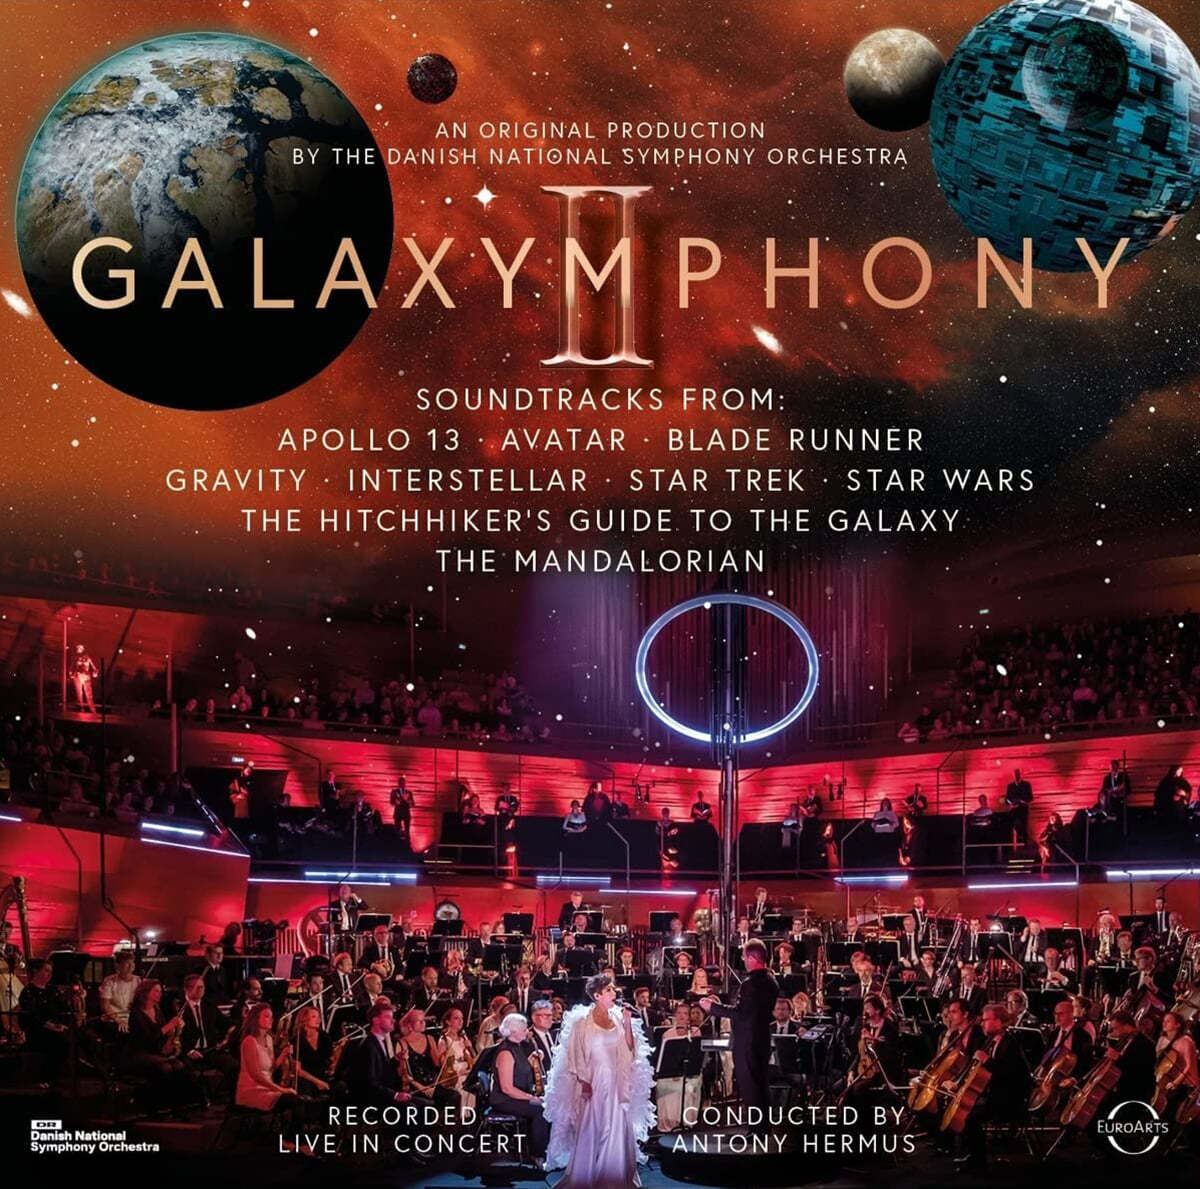 Danish National Symphony Orchestra SF 영화음악 콘서트 (Galaxymphony II: Galaxymphony strikes back) 